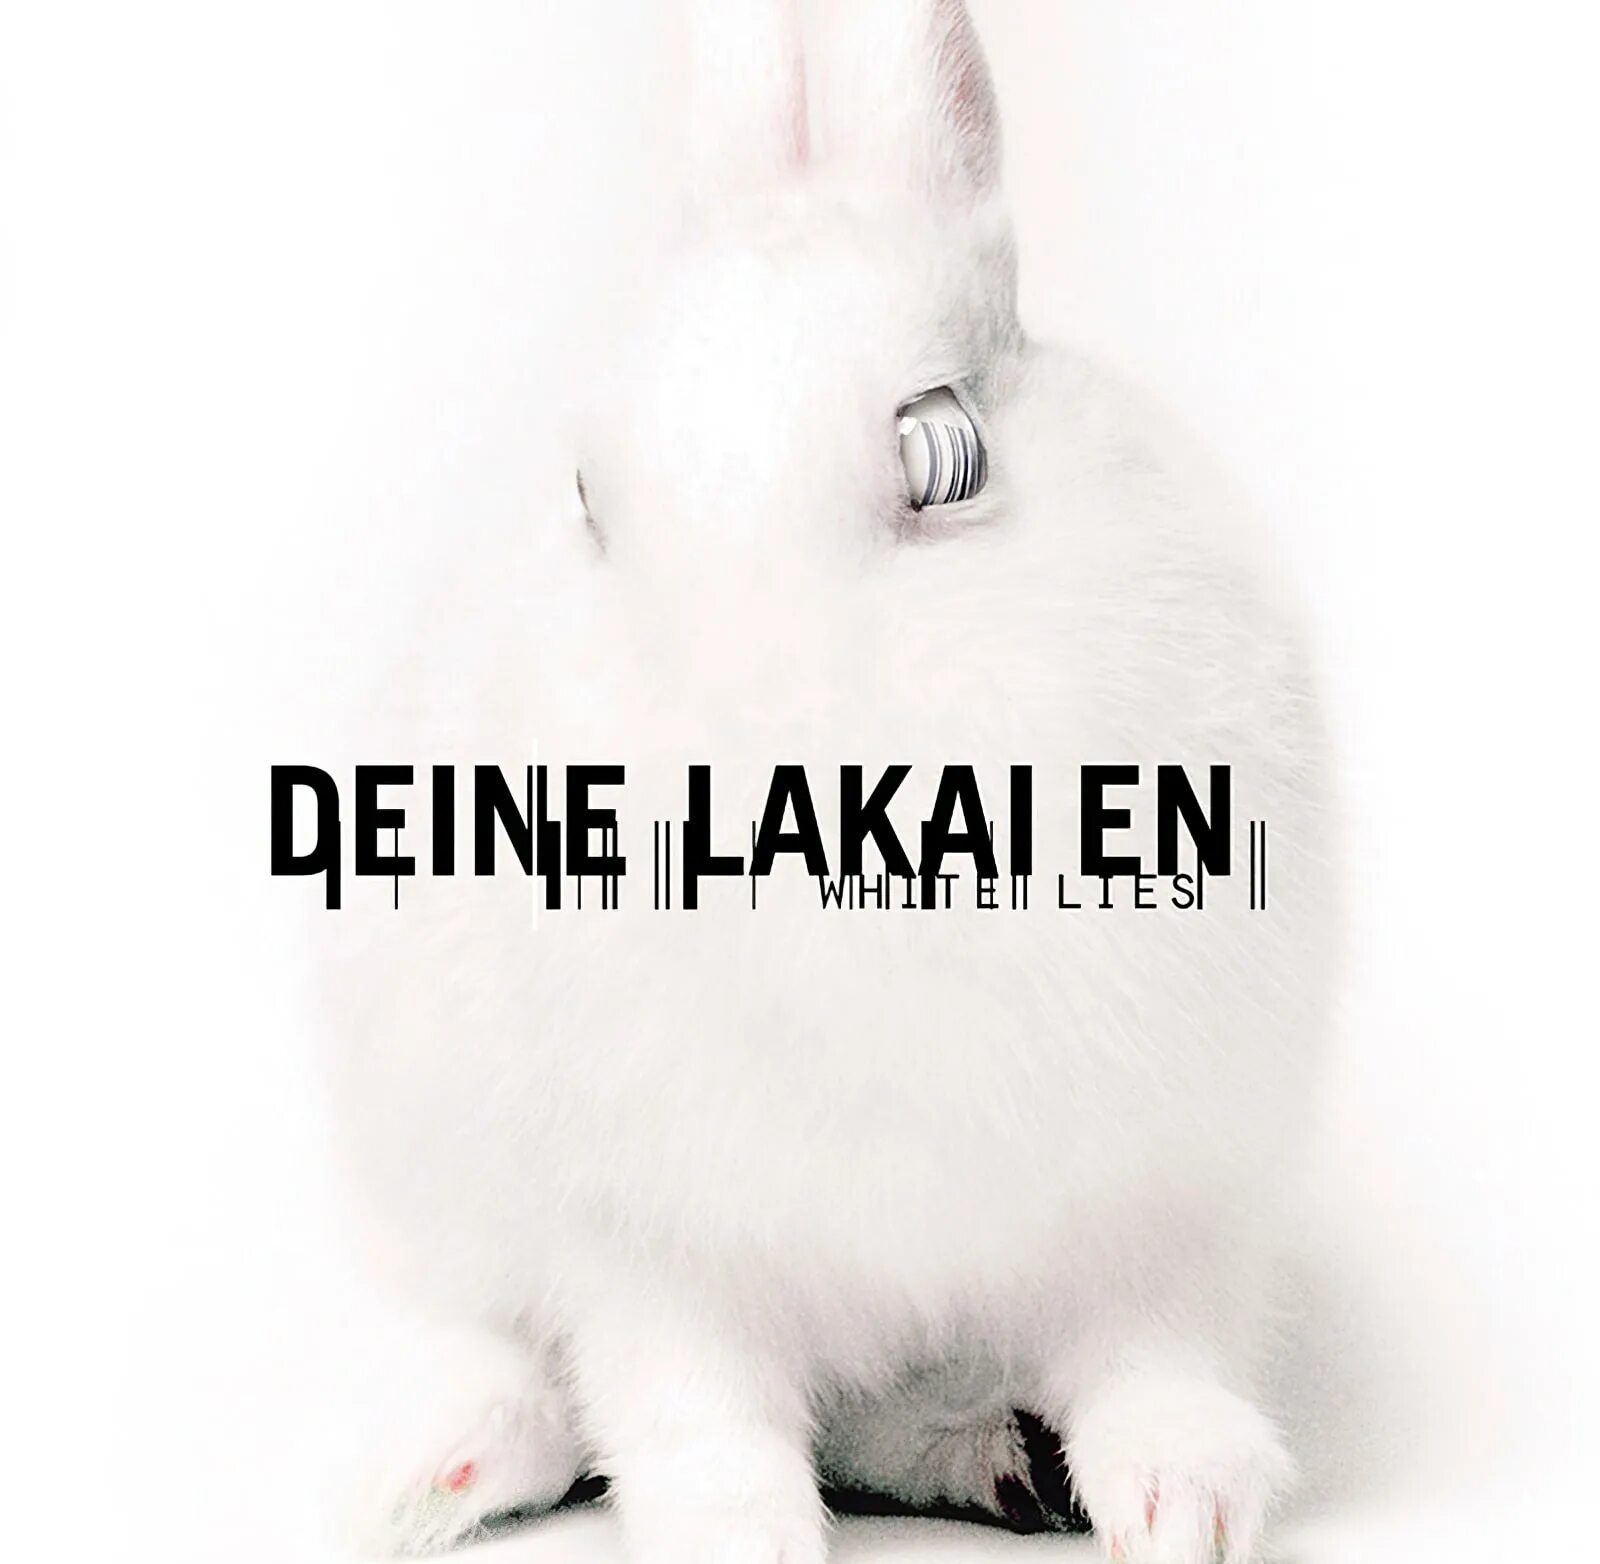 Невинные обманы. Deine Lakaien логотип. Deine Lakaien дискография. Deine Lakaien обложки. Deine Lakaien_-_where you are.